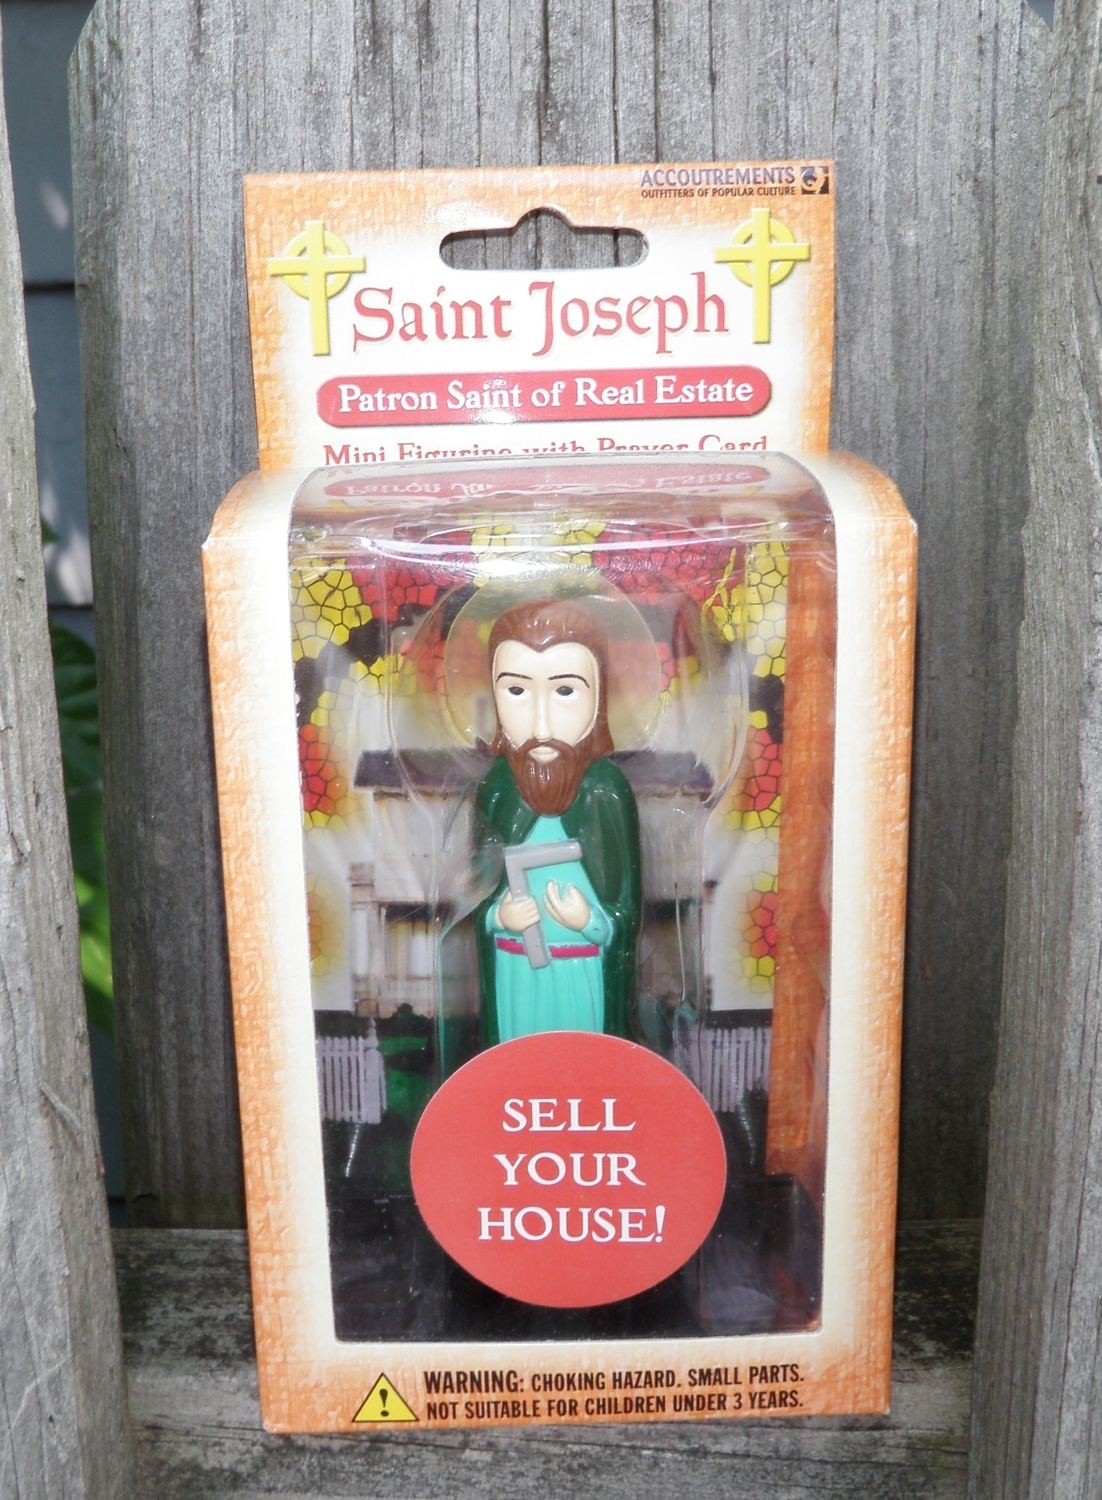 Can a saint sell a house?